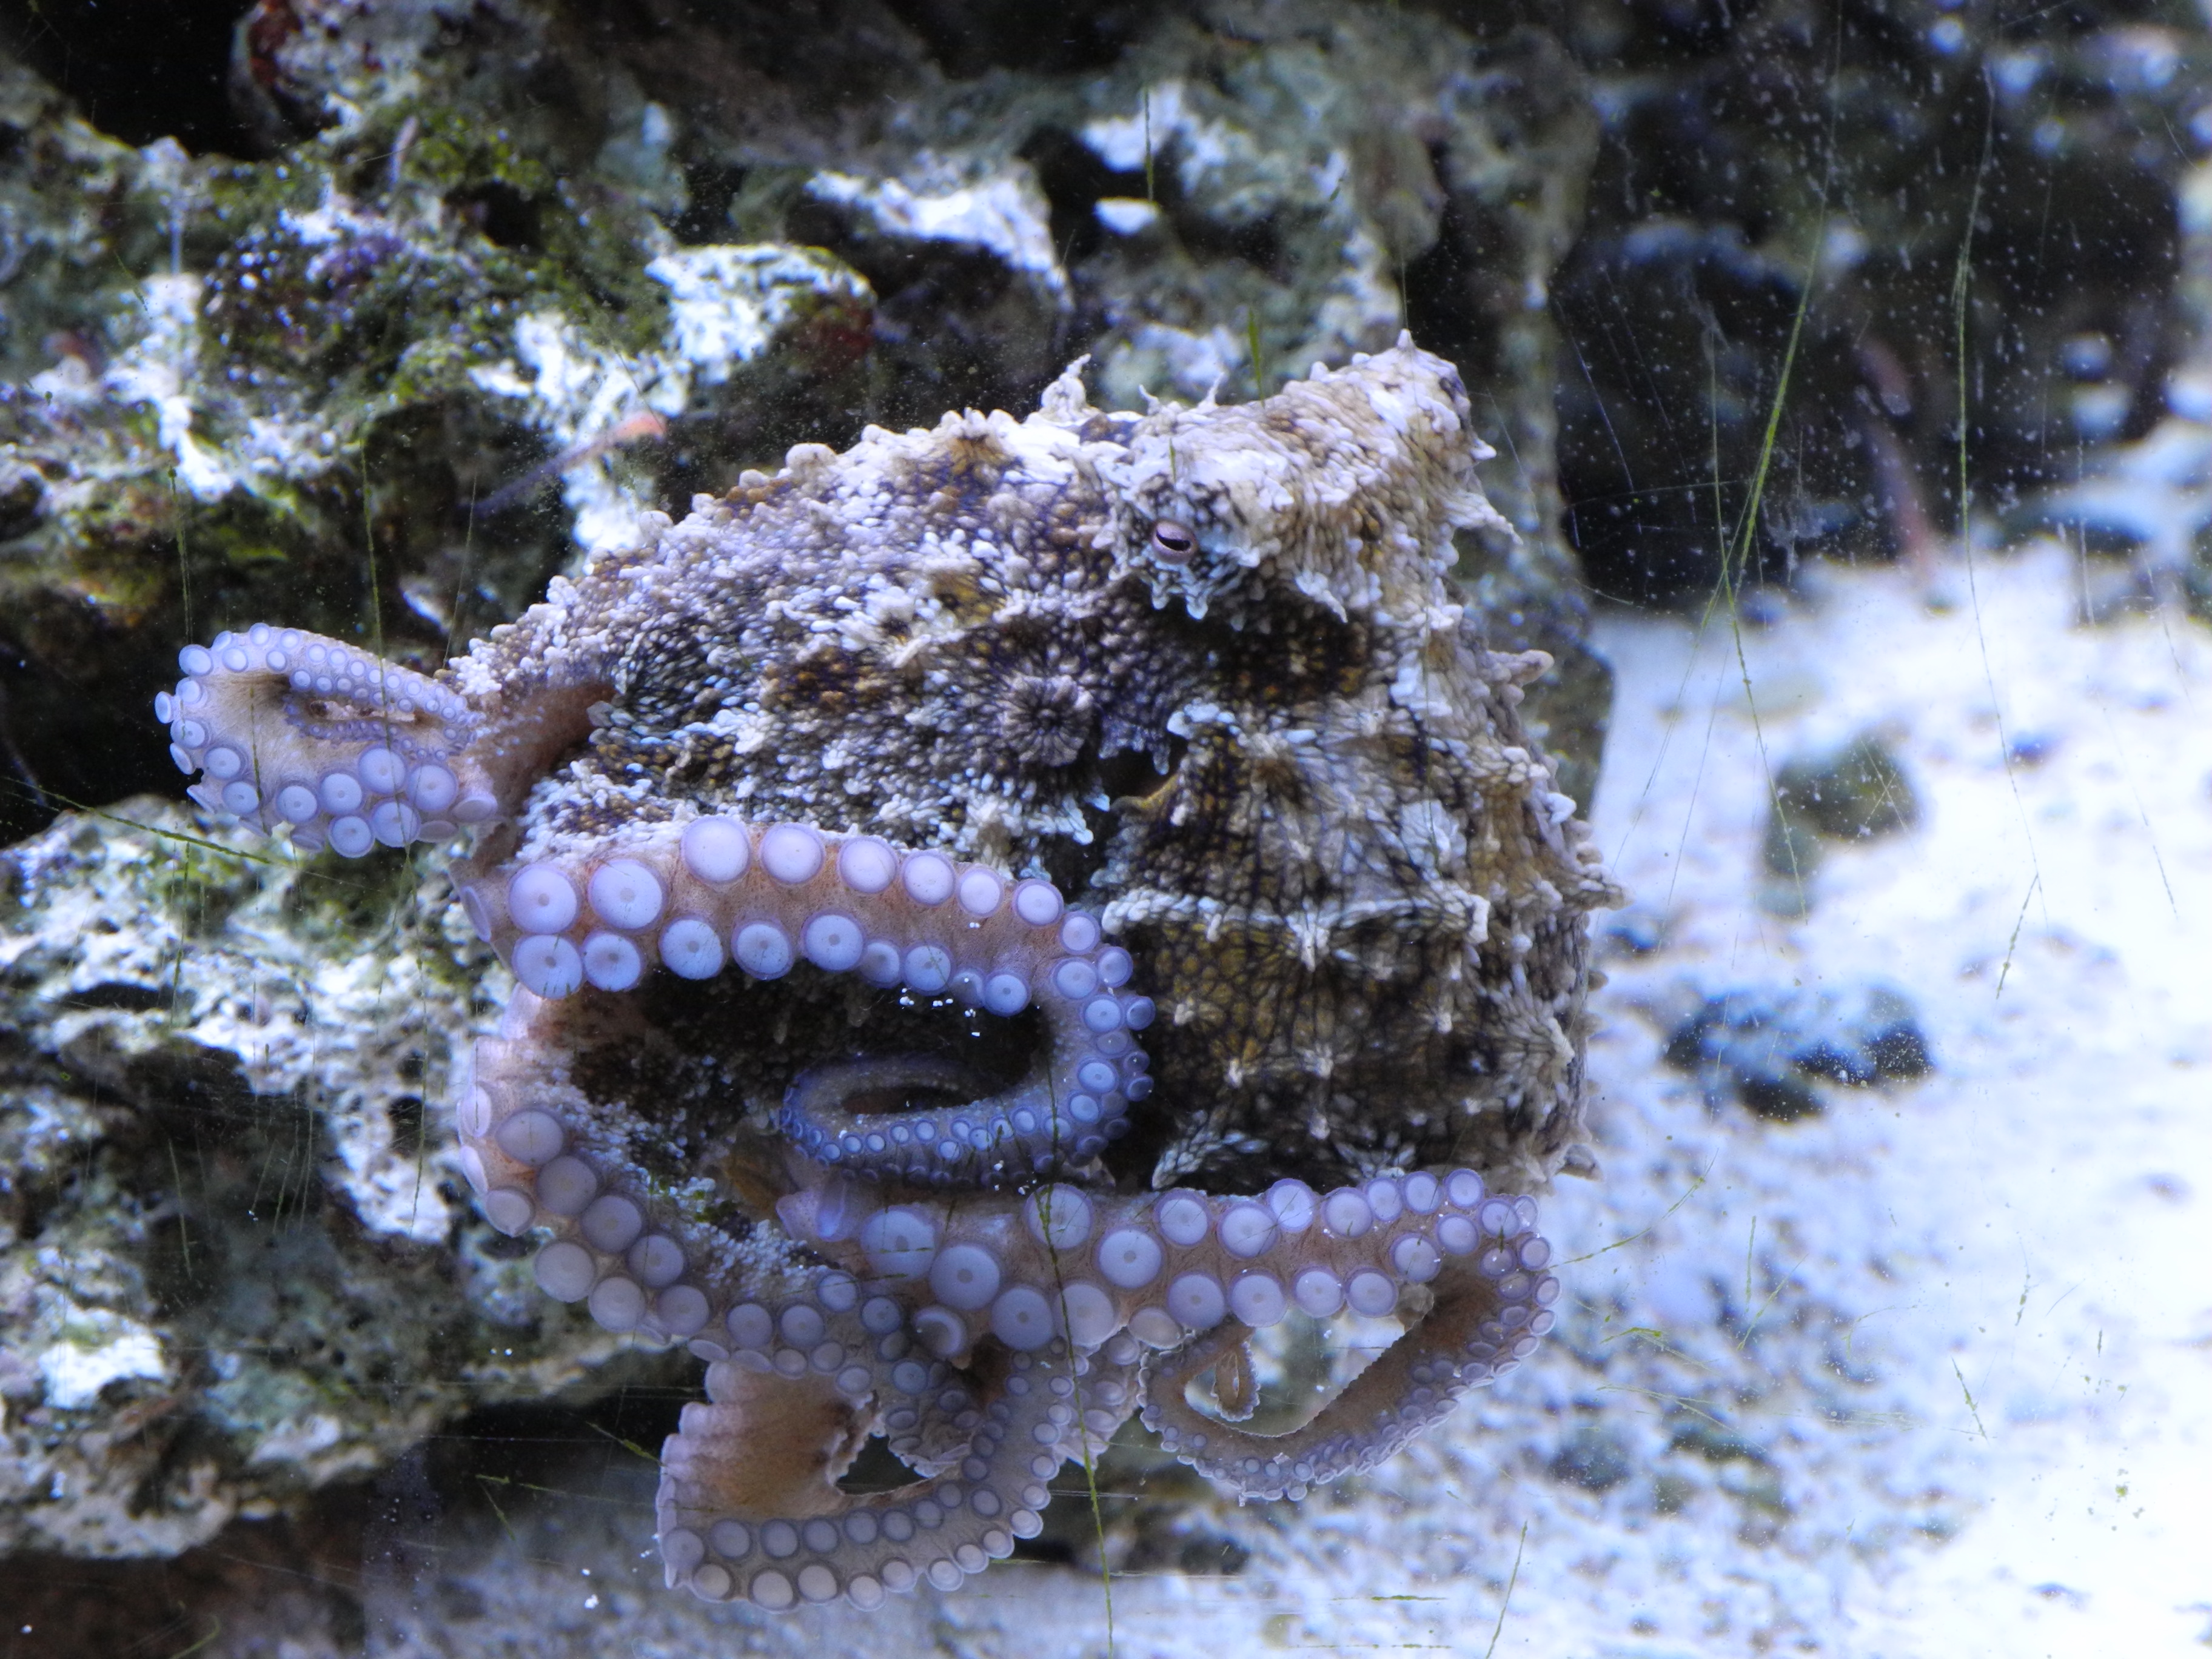 Shelby 2015/06/10 - Octopus Hummelincki